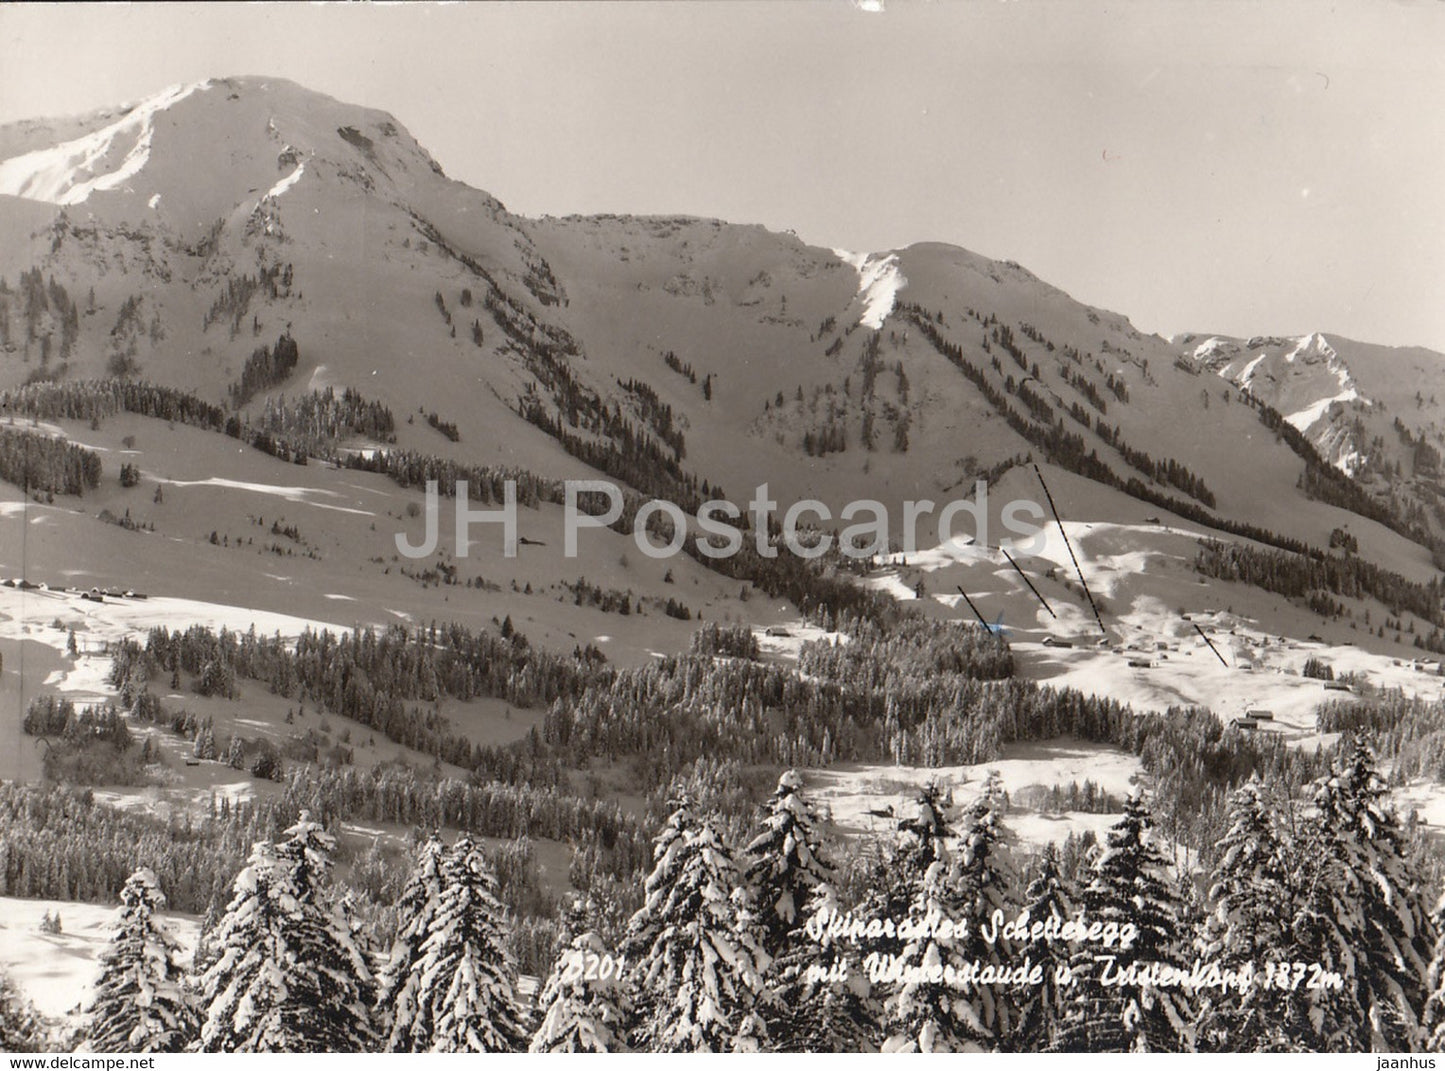 Skiparadies Schetteregg mit Winterstaude u Tristenkopf 1872 m - 1972 - Austria - used - JH Postcards